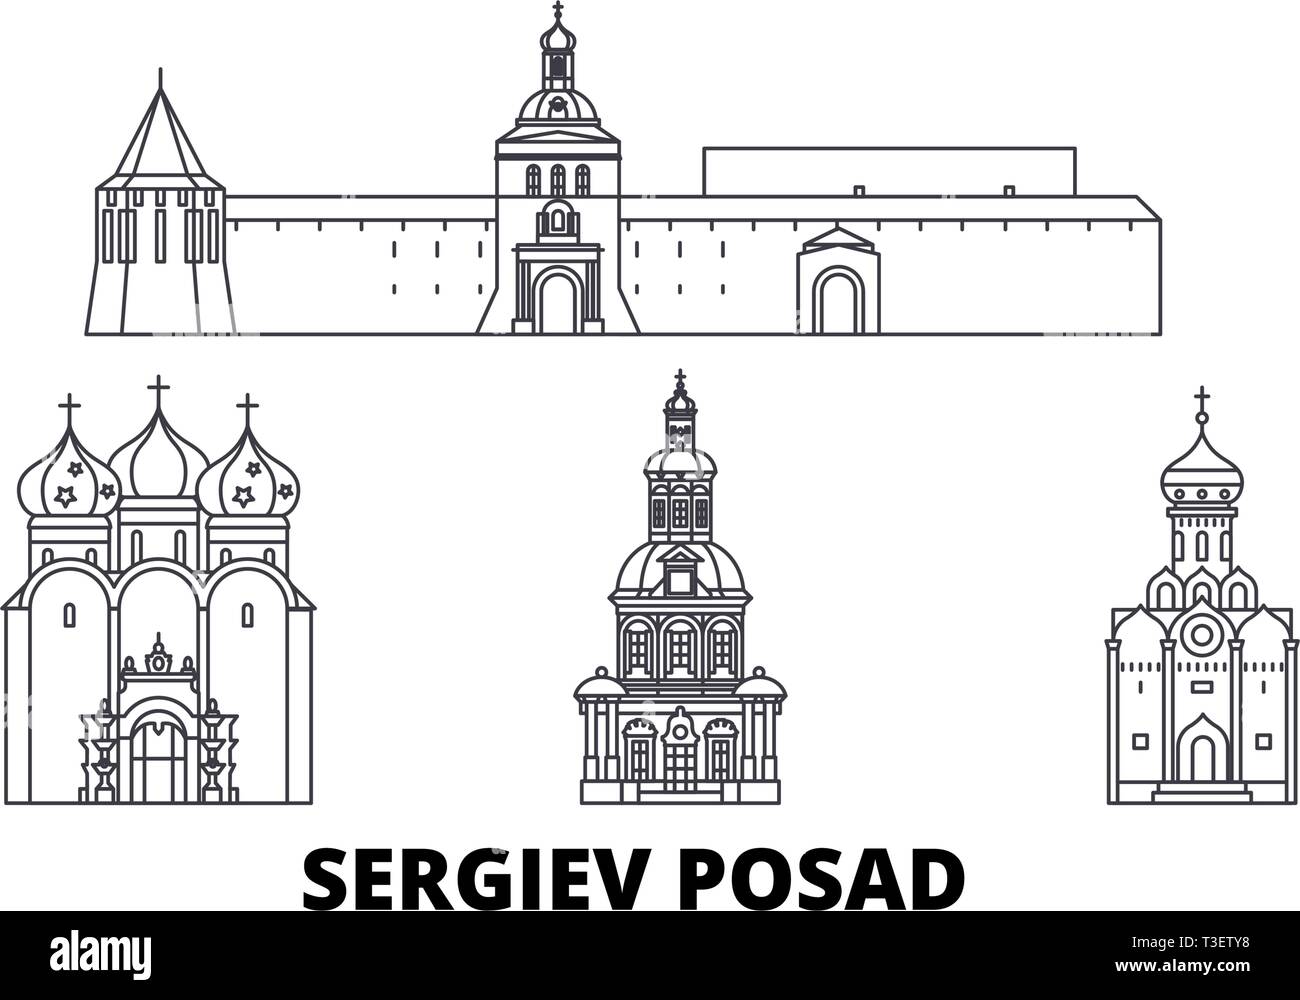 Russia, Sergiev Posad line travel skyline set. Russia, Sergiev Posad outline city vector illustration, symbol, travel sights, landmarks. Stock Vector